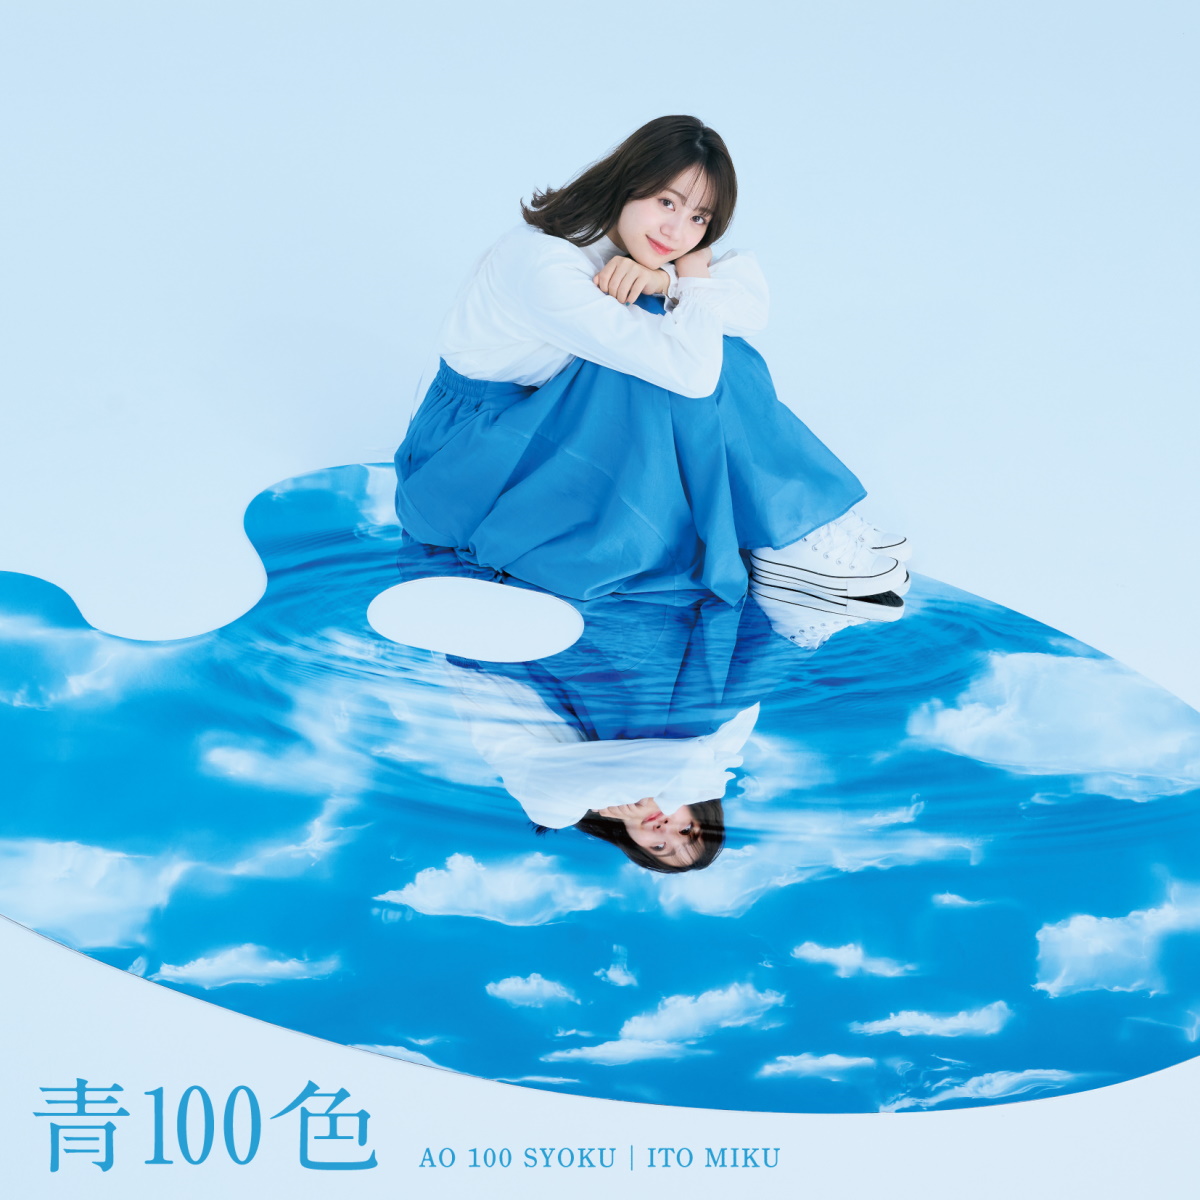 Cover art for『Miku Itou - Ao 100 Shoku』from the release『Ao 100 Shoku』